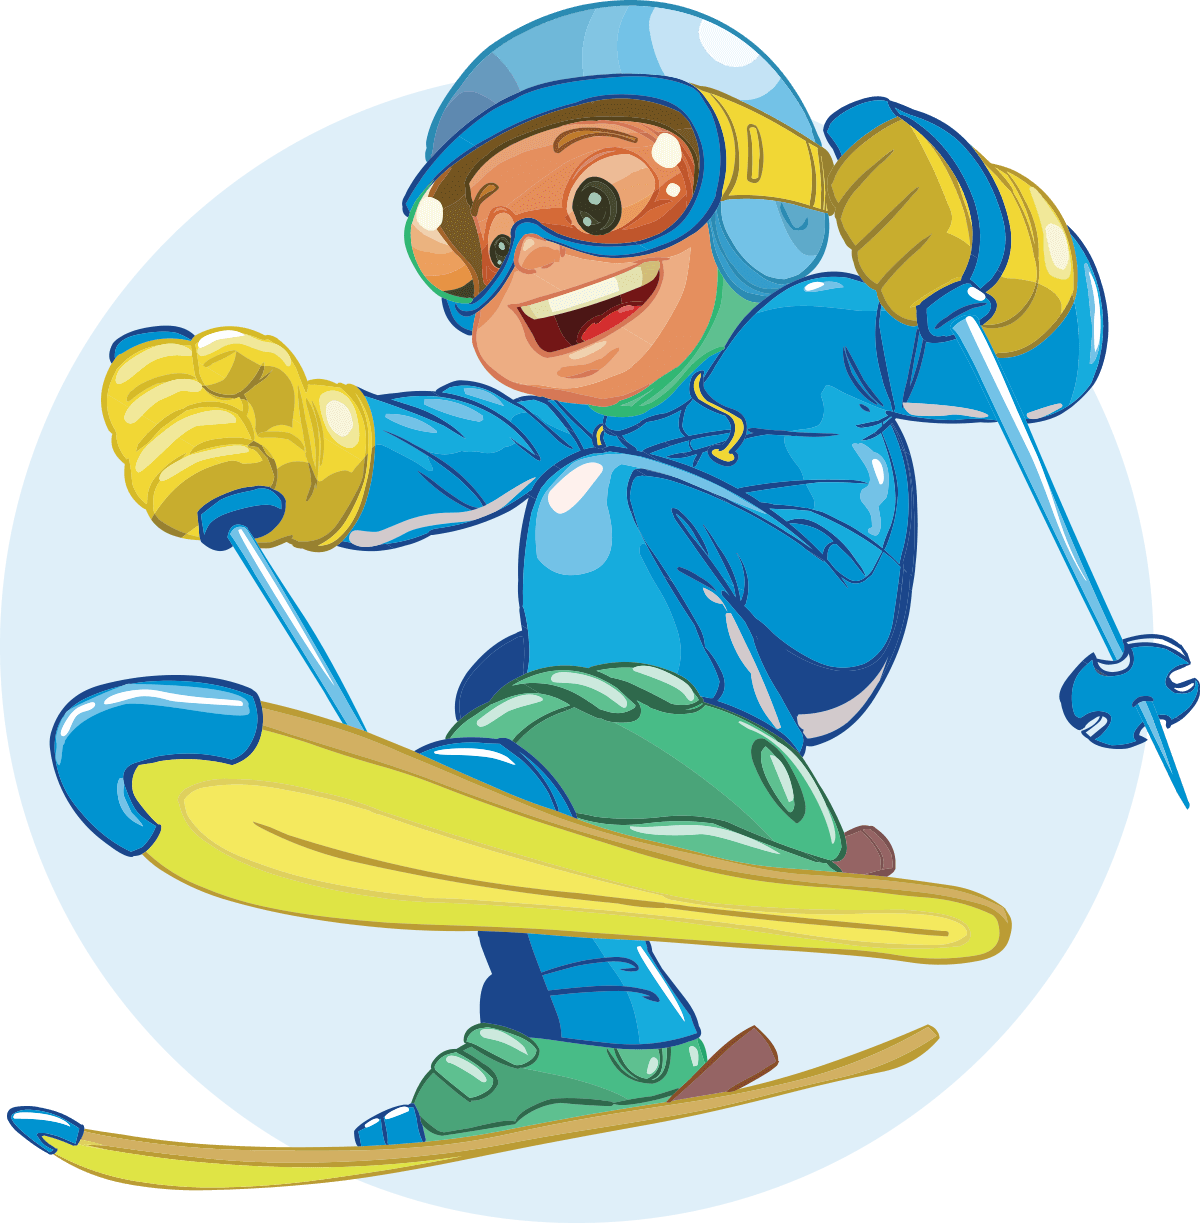 A Cartoon Of A Boy Skiing